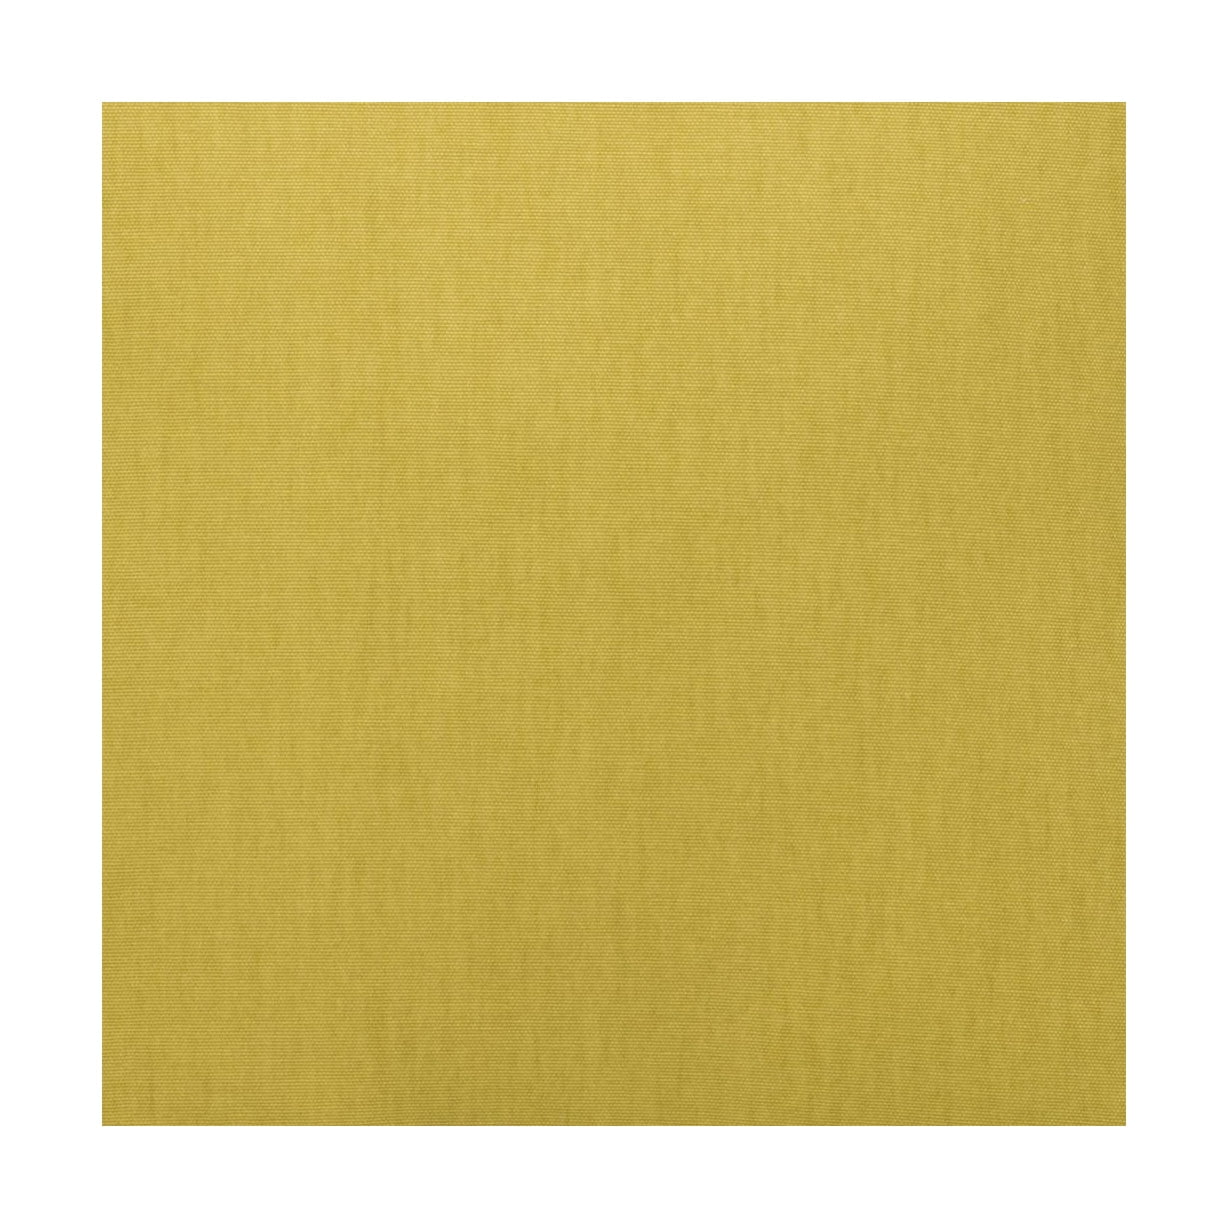 Larghezza del tessuto Spira Klotz 150 cm (prezzo per metro), giallo